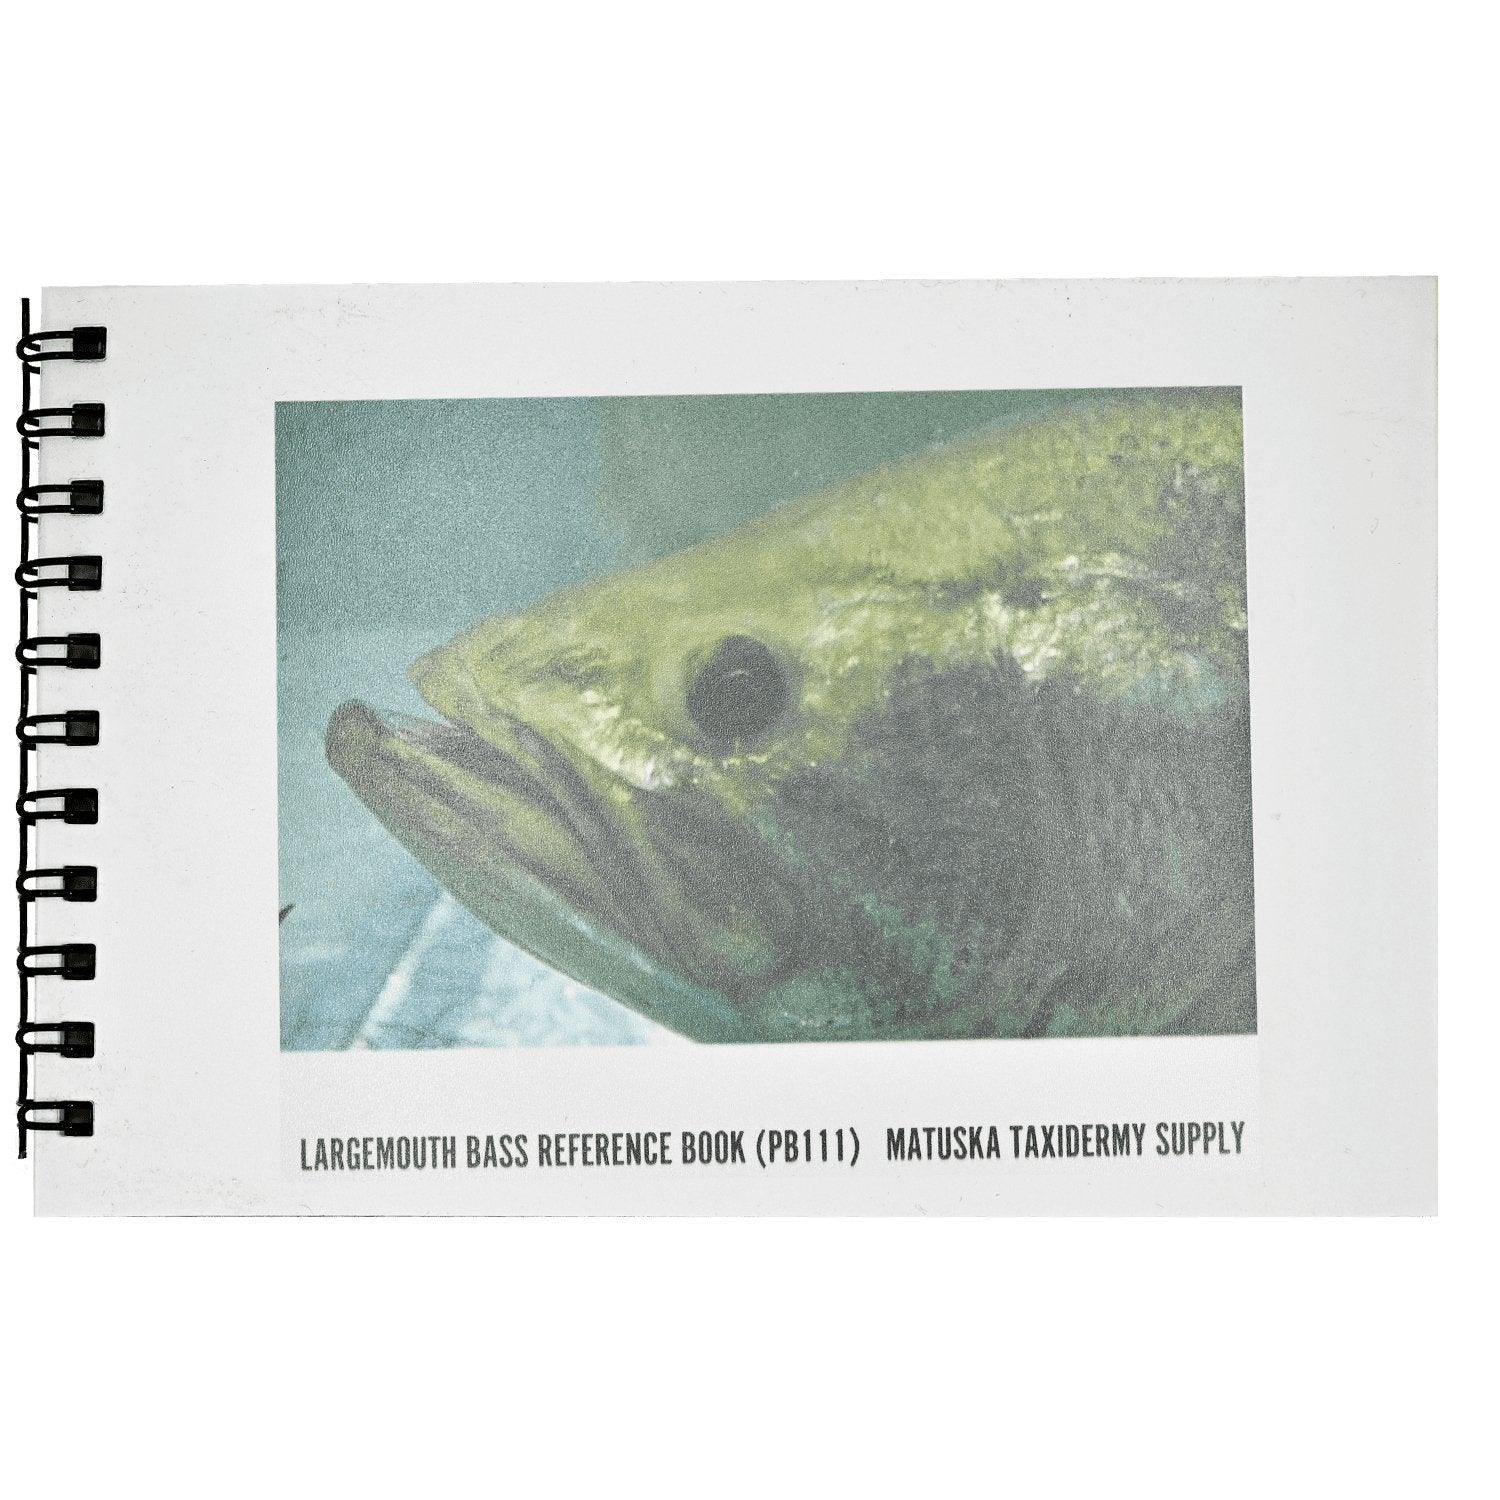 Fish Reference Books (4 x 6) - Matuska Taxidermy Supply Company